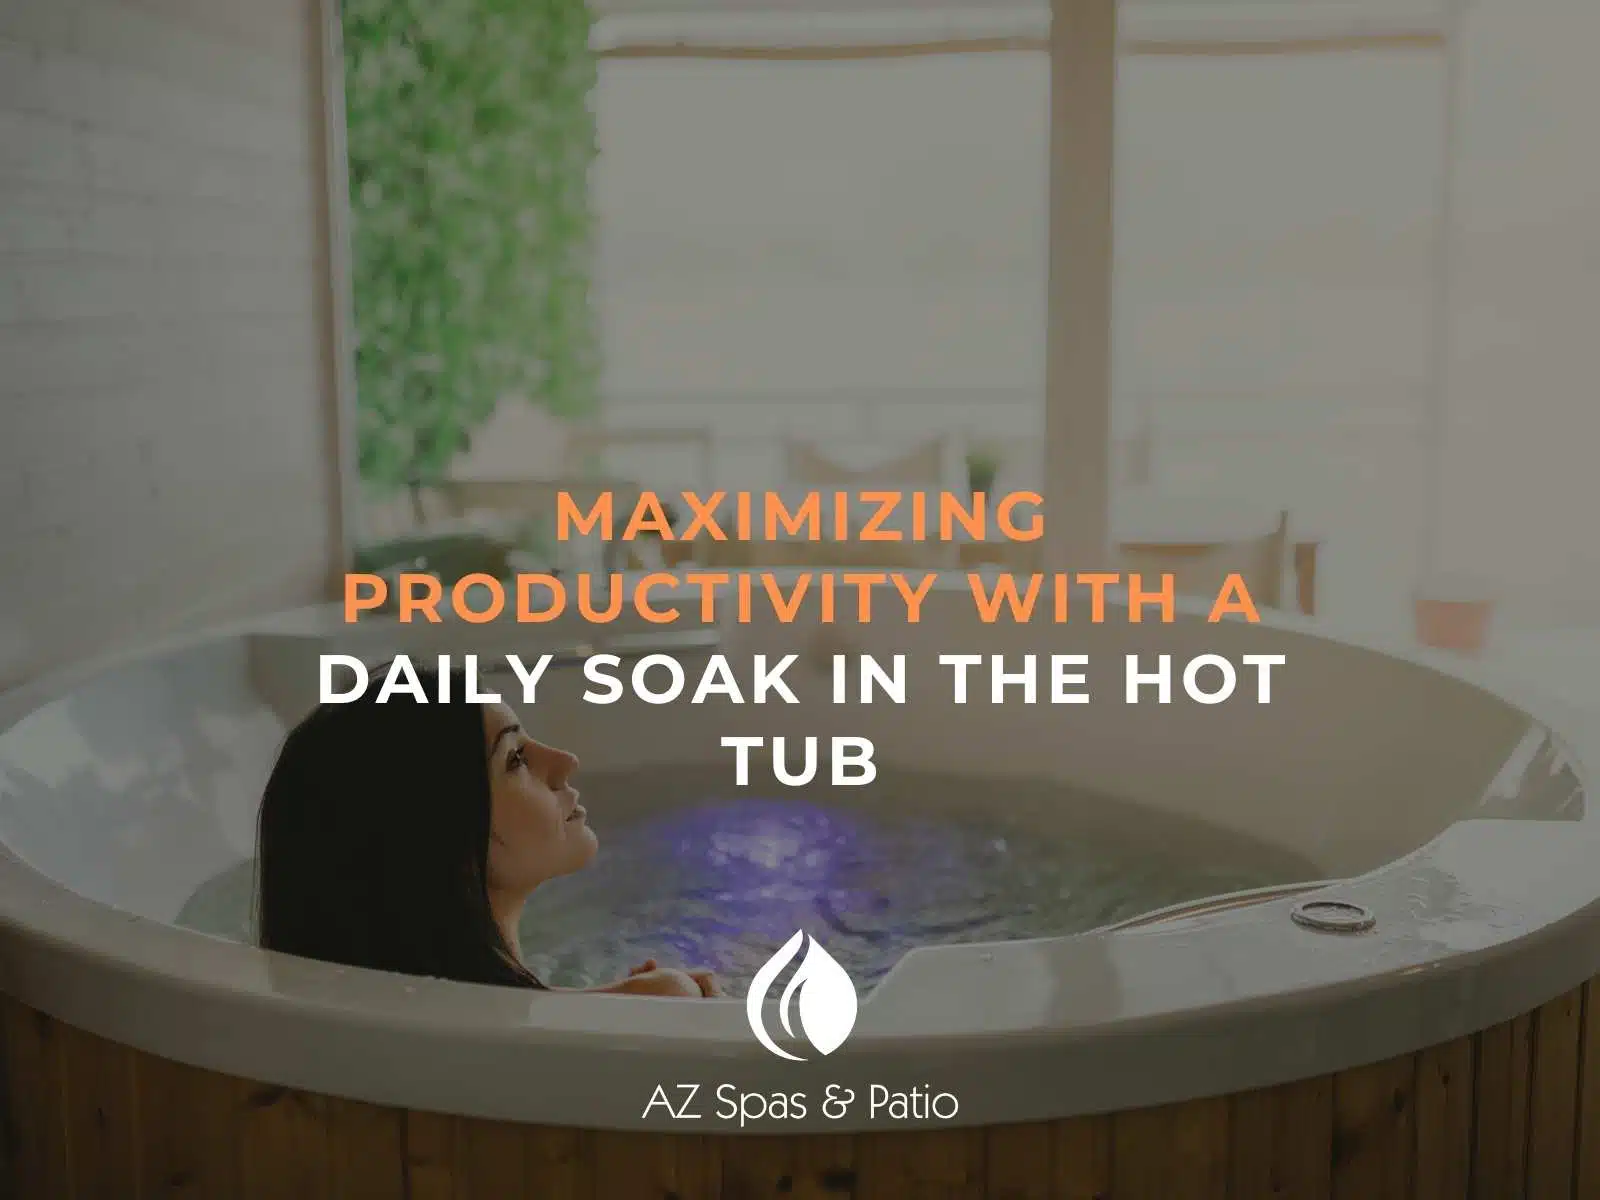 Maximizing Productivity With a Daily Soak In The Hot Tub